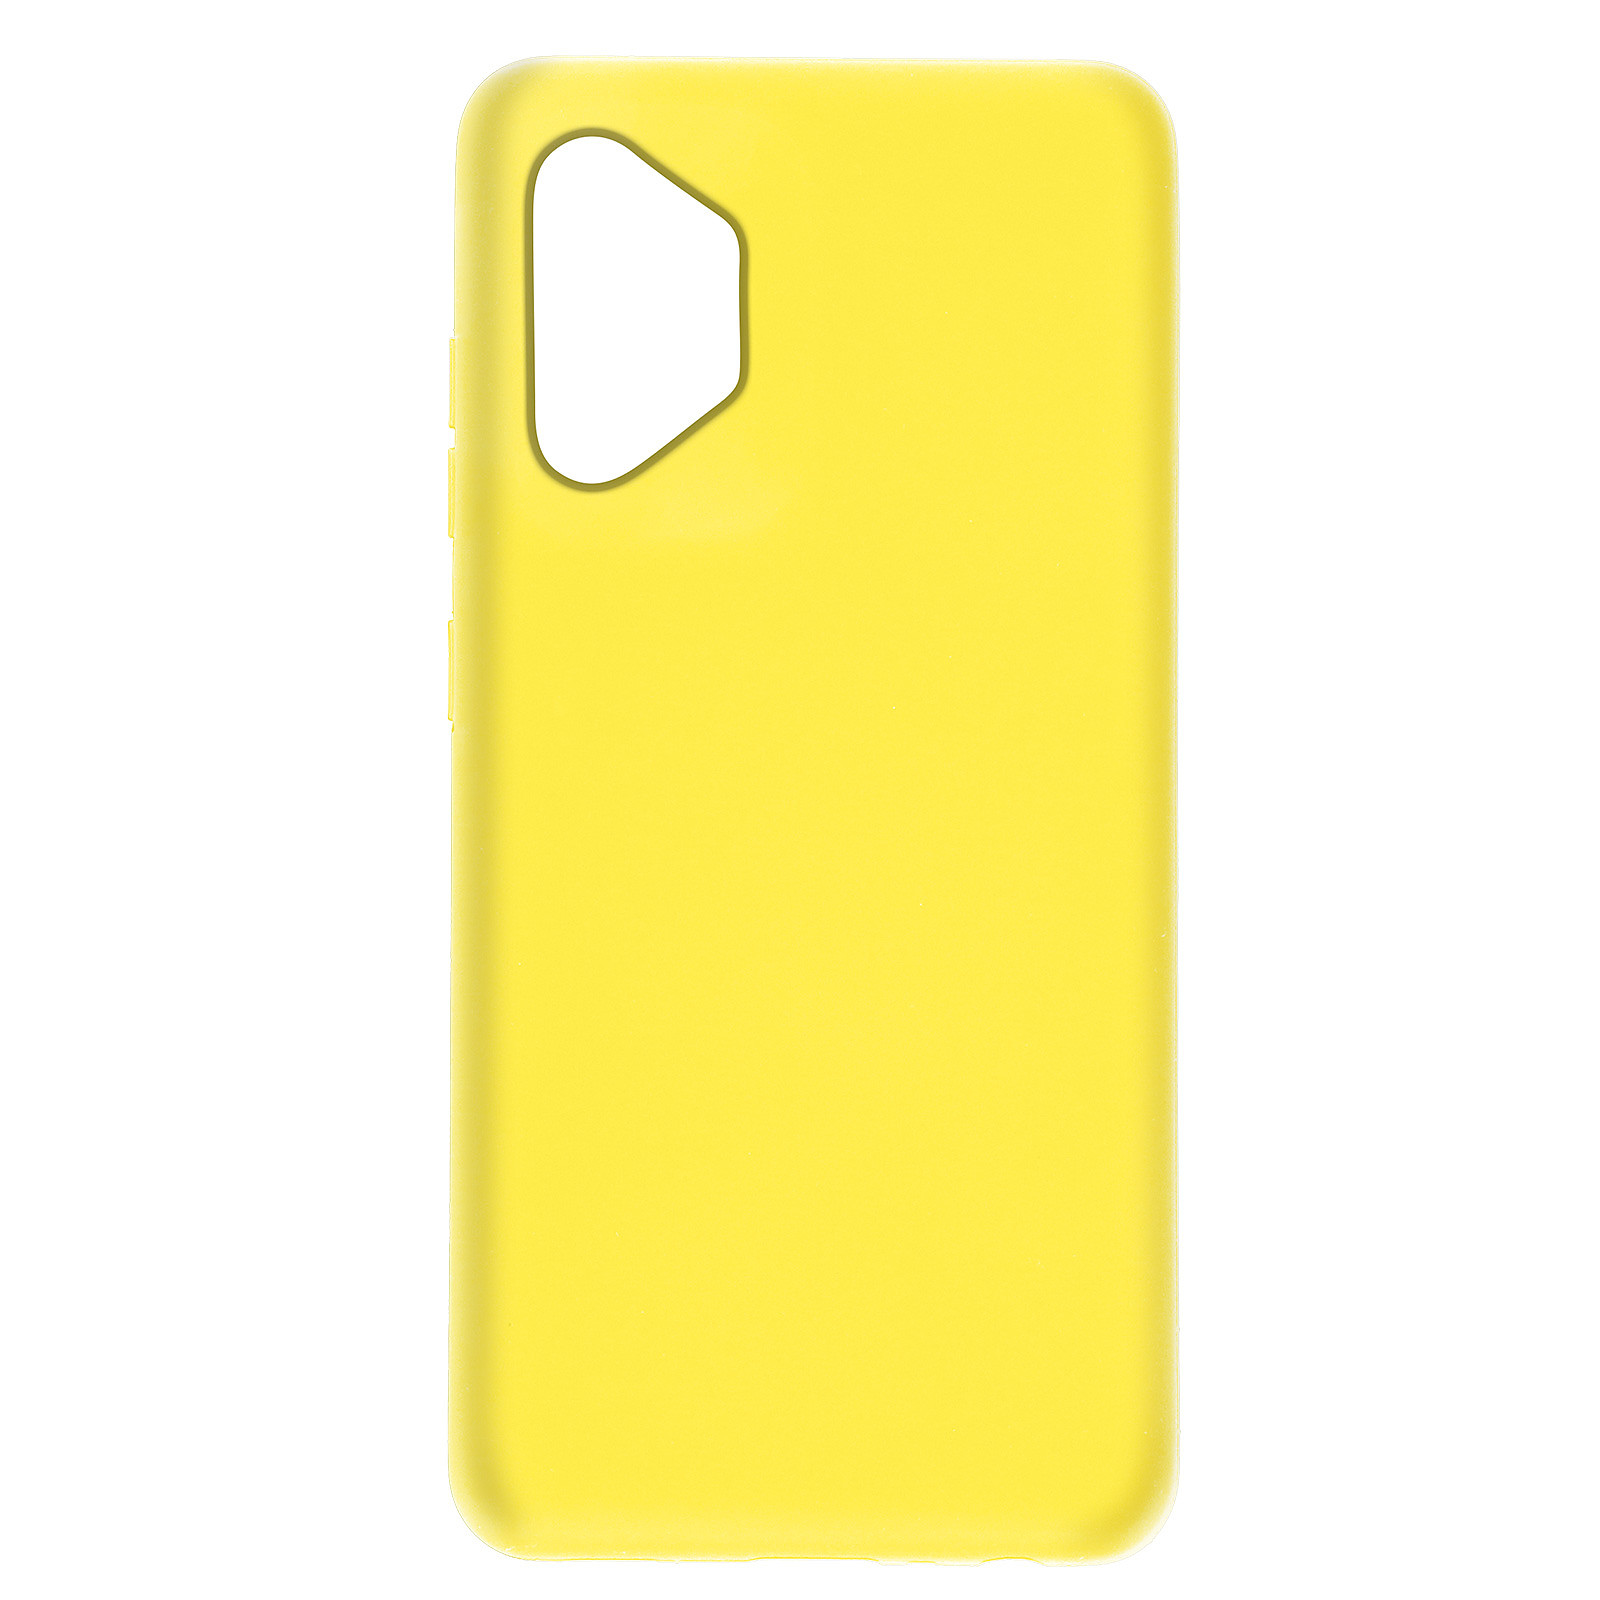 Avizar Coque pour Samsung Galaxy A32 5G Silicone Semi-rigide Finition Soft Touch Fine jaune - Coque telephone Avizar